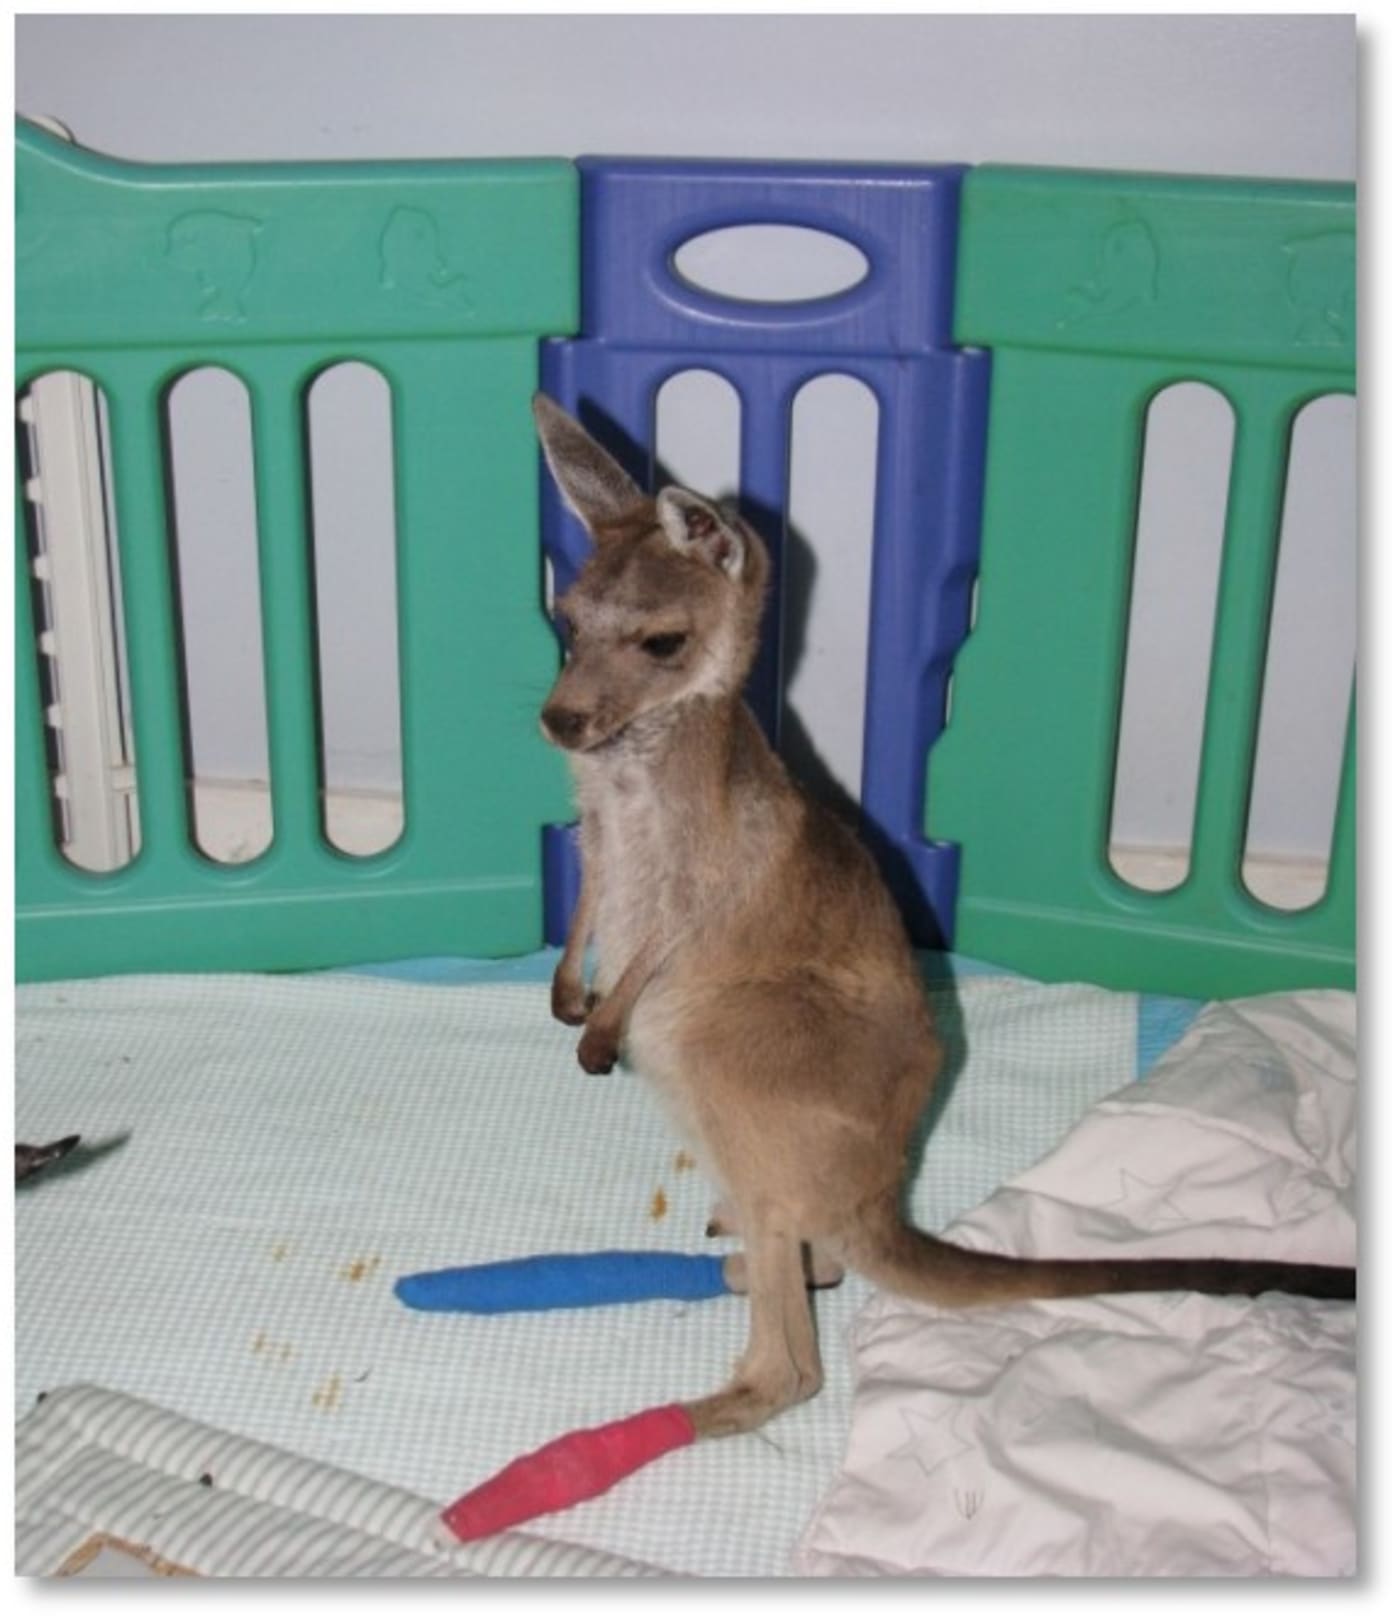 Clover, an orphaned western grey kangaroo